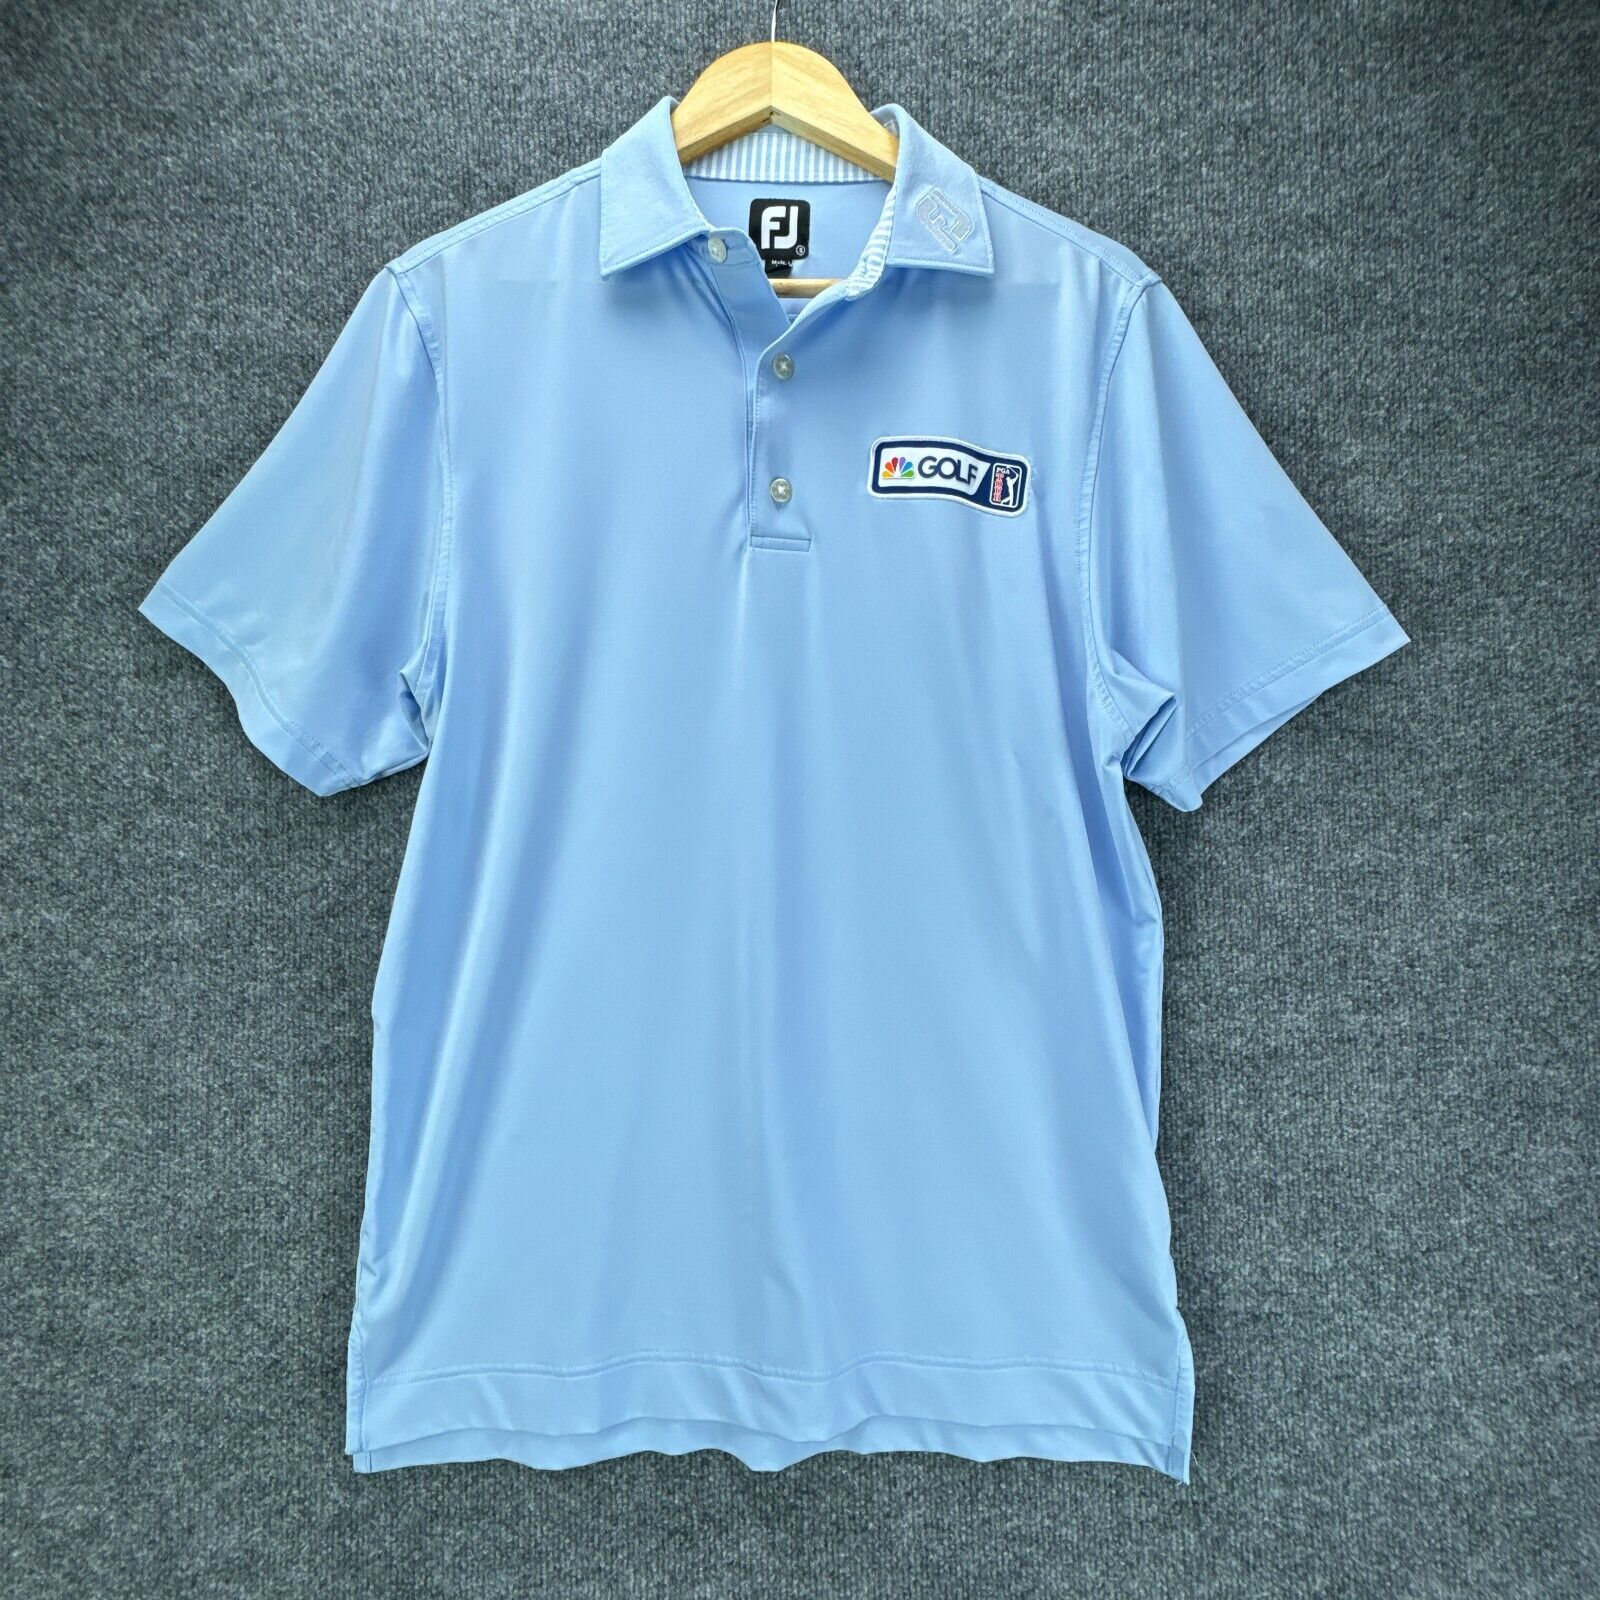 FJ Footjoy Polo Shirt Mens Small Blue NBC Golf PGA Tour Collar Performance